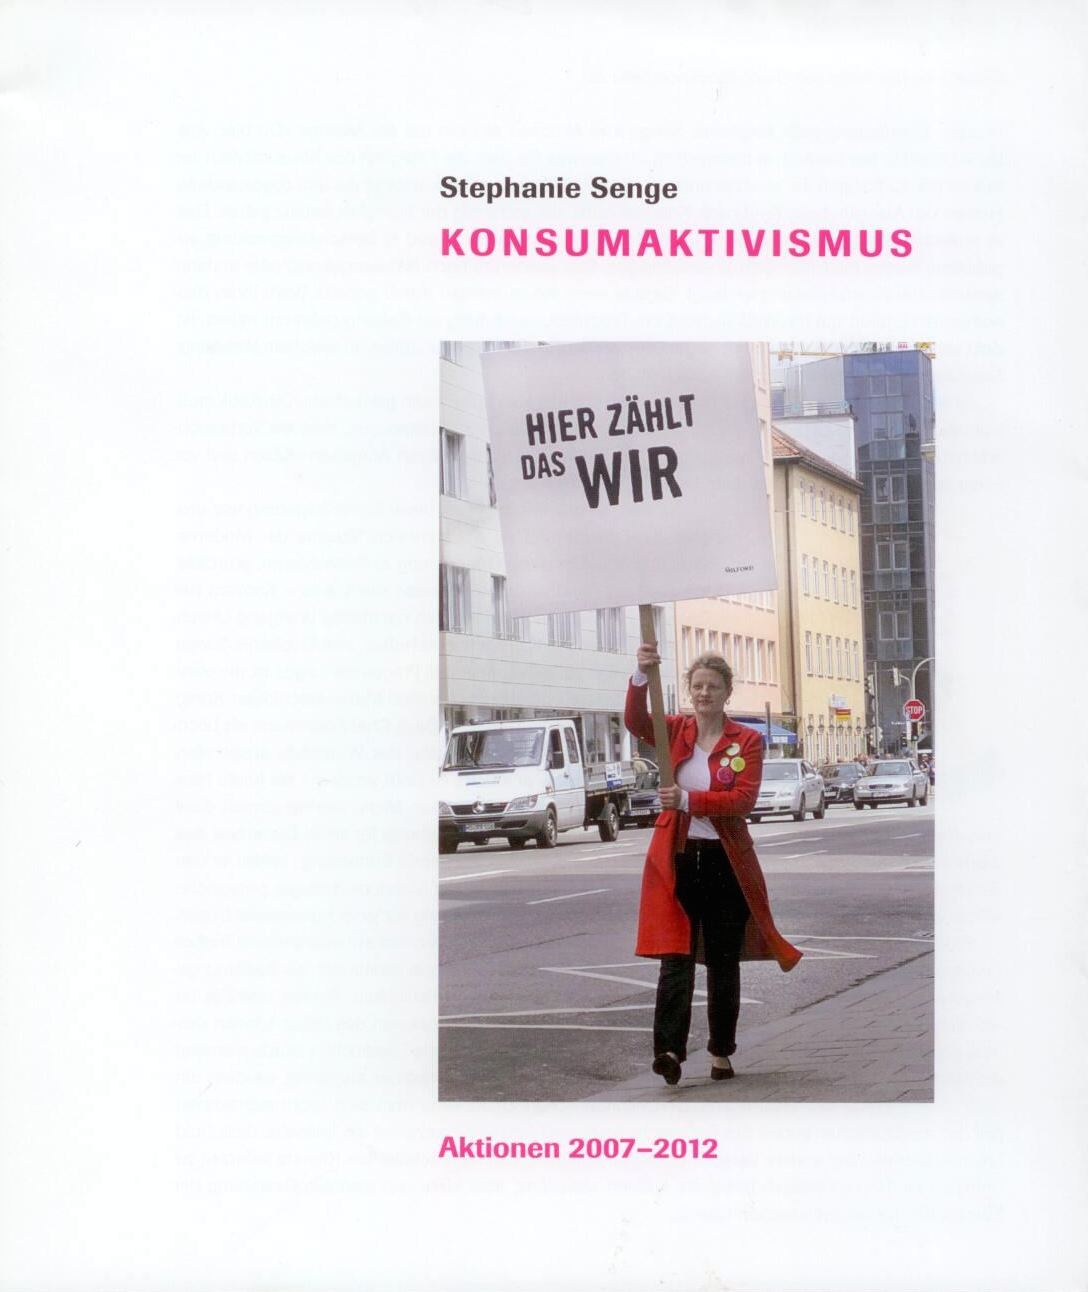 Stephanie Senge: Konsumaktivismus, Bild: Aktionen 2007-2012. 18m Galerie, Berlin, 2012.